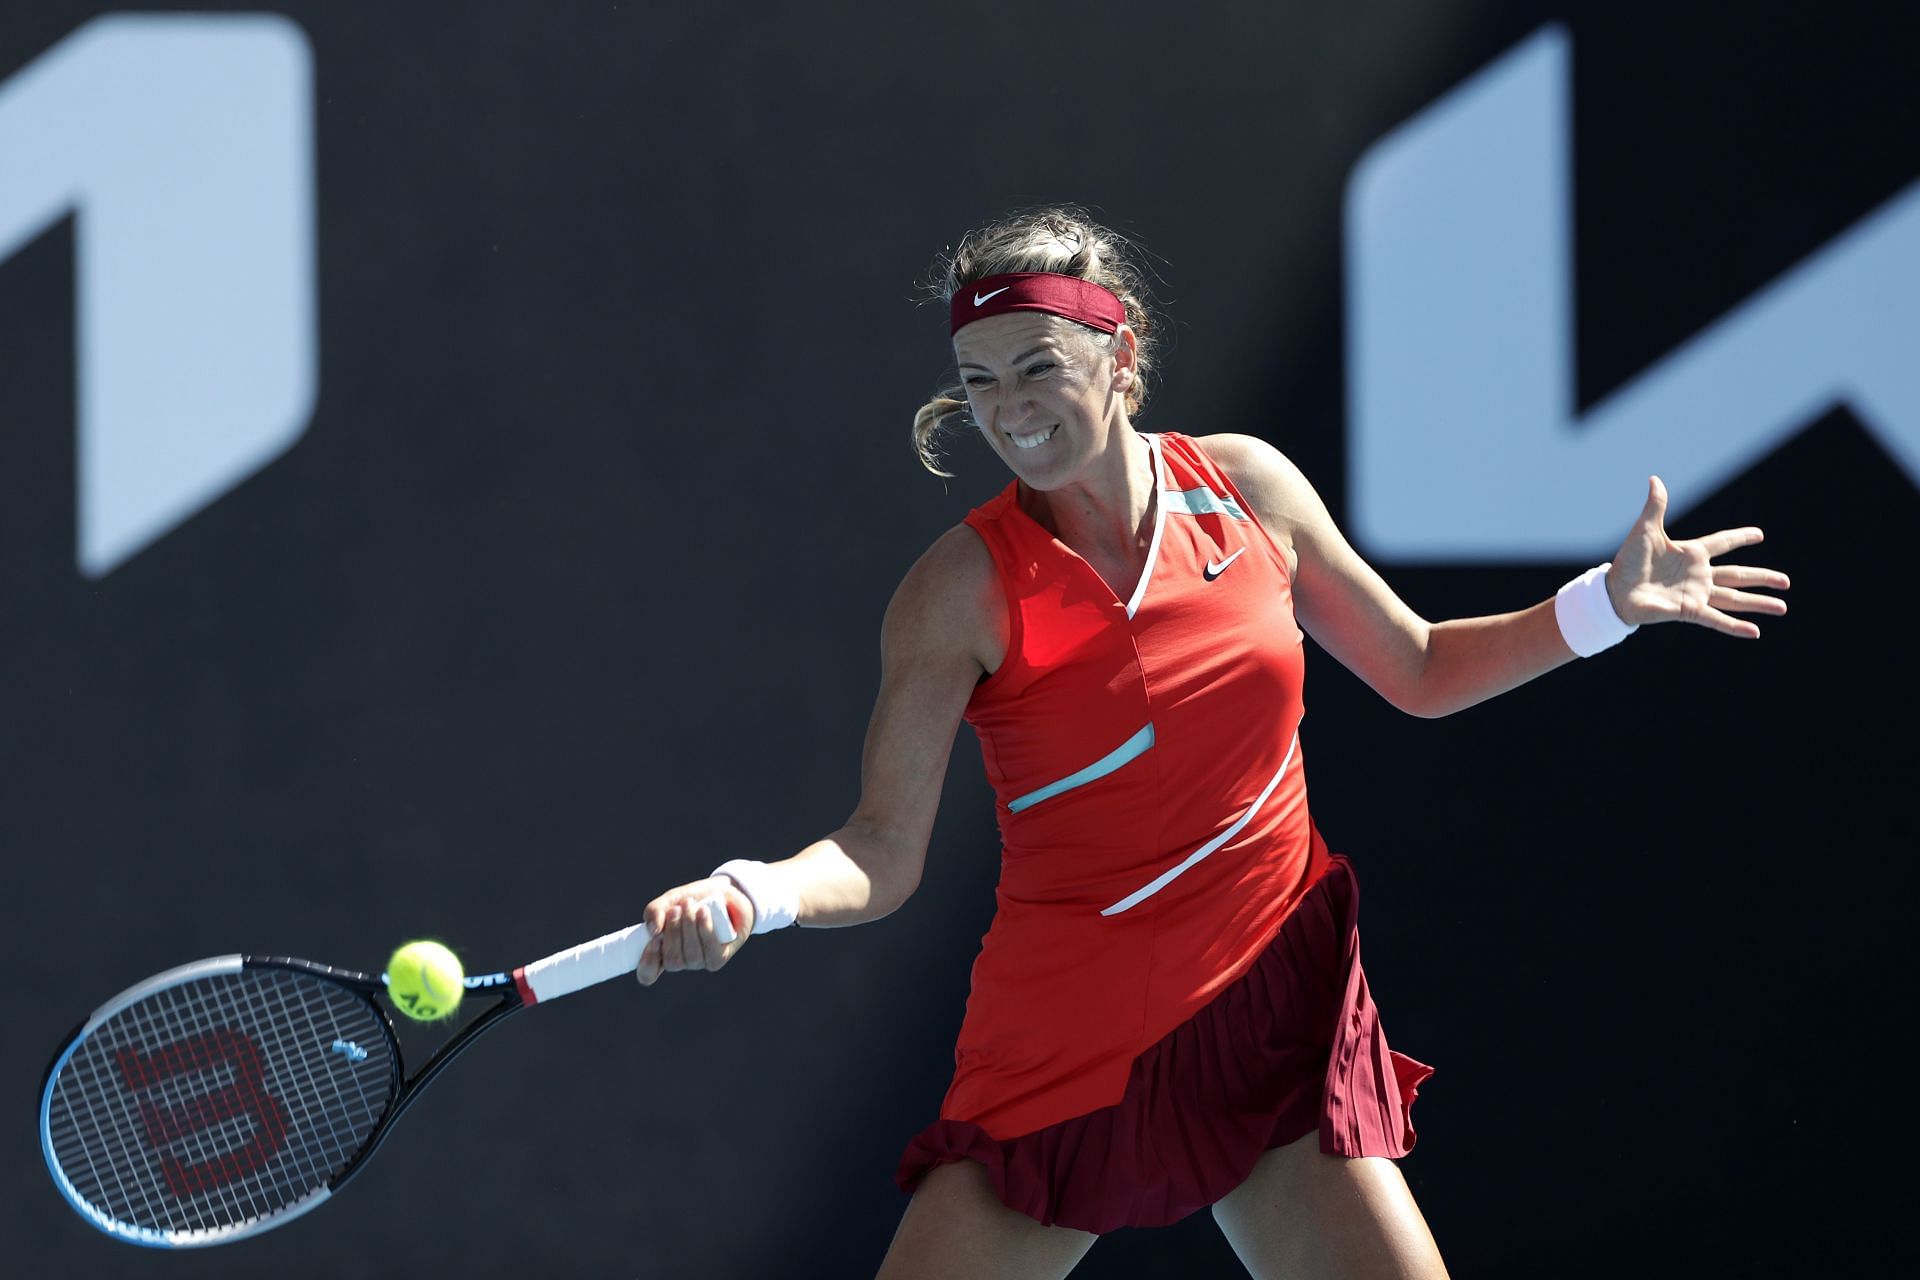 Victoria Azarenka plays a forehand at the 2022 Australian Open